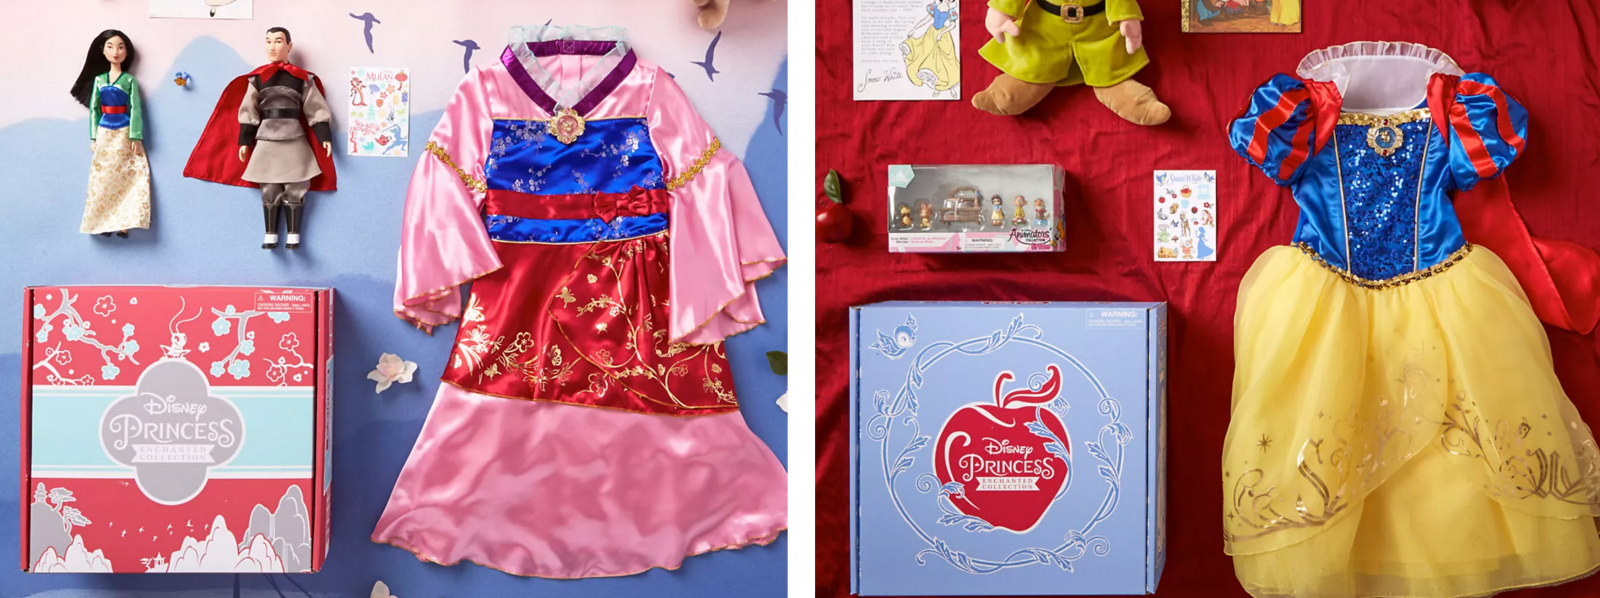 Disney princess box collection